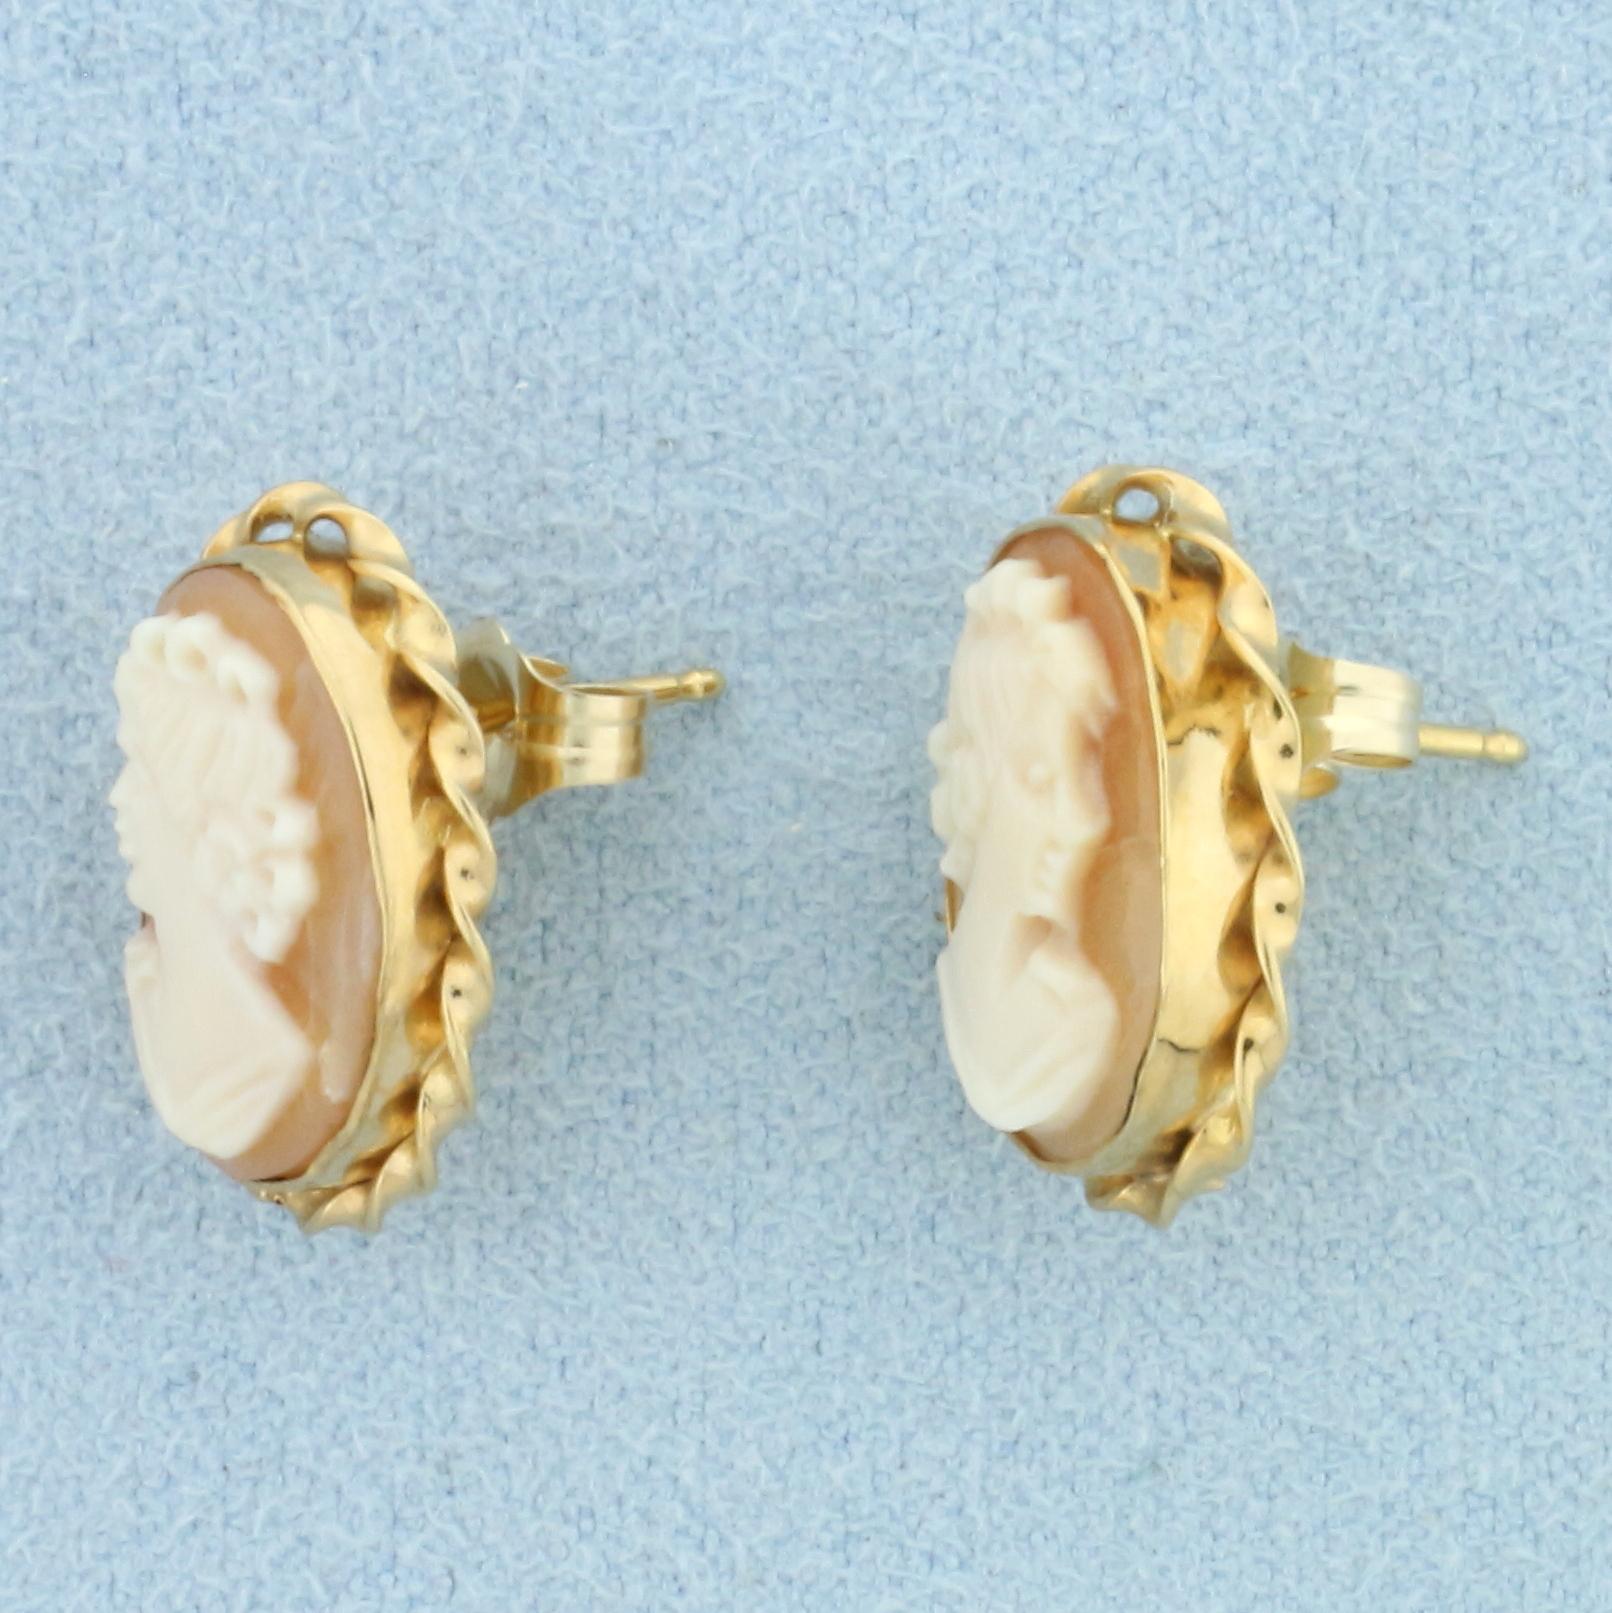 Designer Van Dell Cameo Stud Earrings In 14k Yellow Gold